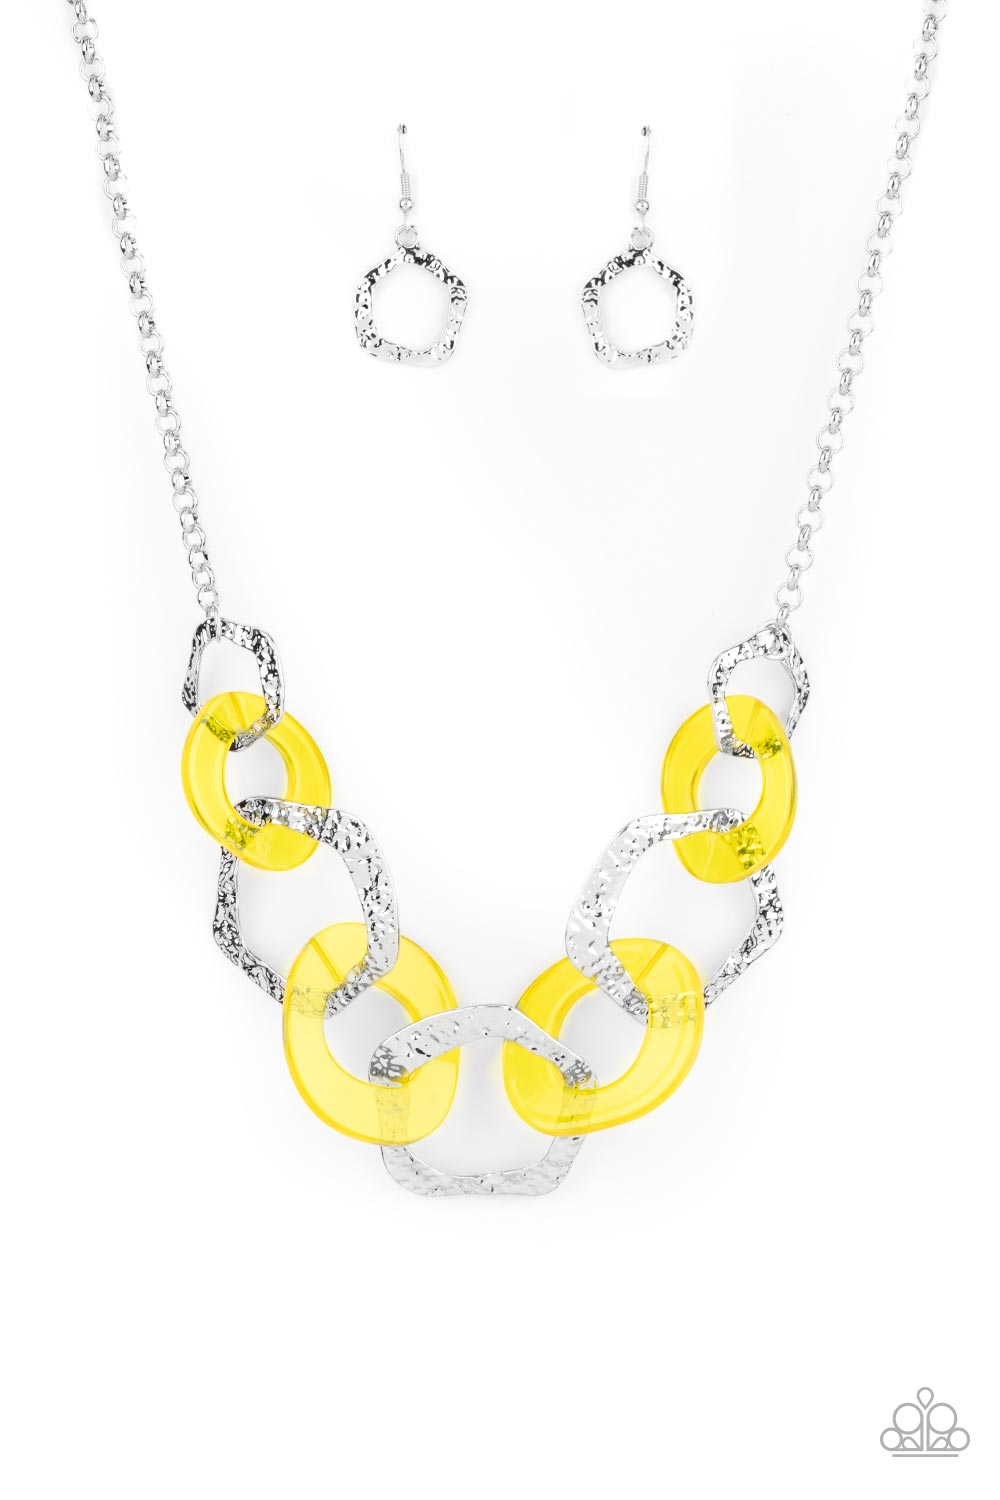 Urban Circus - Yellow Necklace freeshipping - JewLz4u Gemstone Gallery